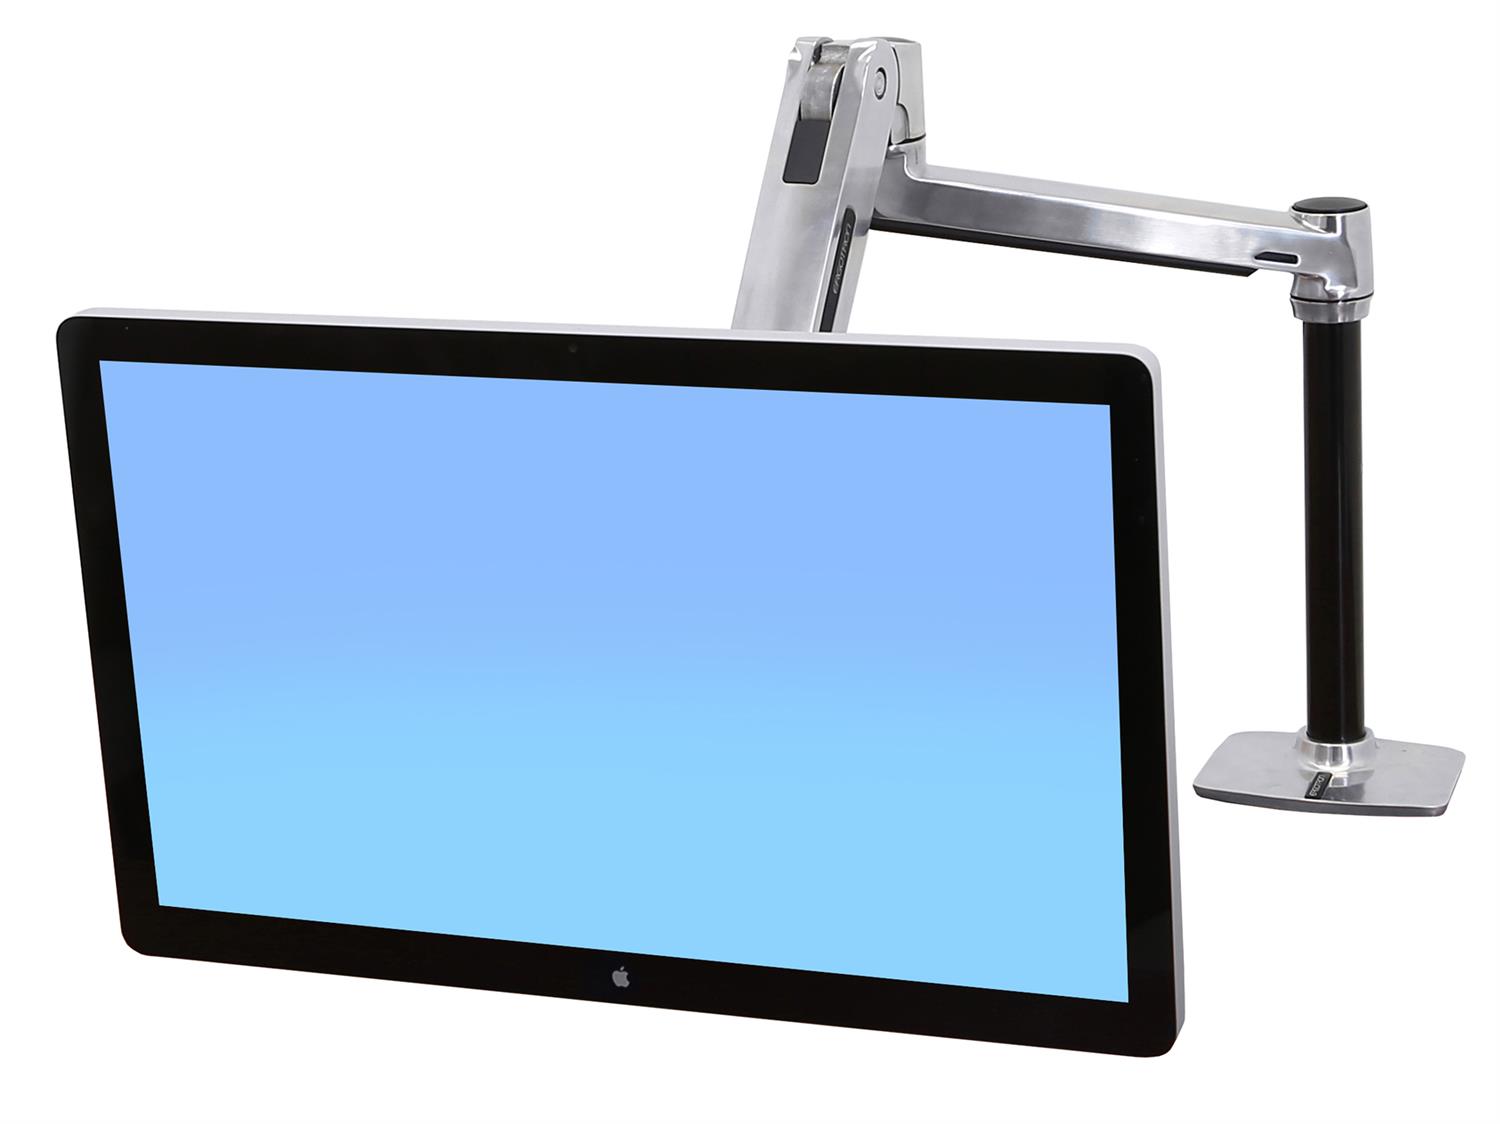 Ergotron 45-384-026 LX HD Sit-Stand Desk Mount LCD Arm кронштейн настольный до 42, до 13,6 кг